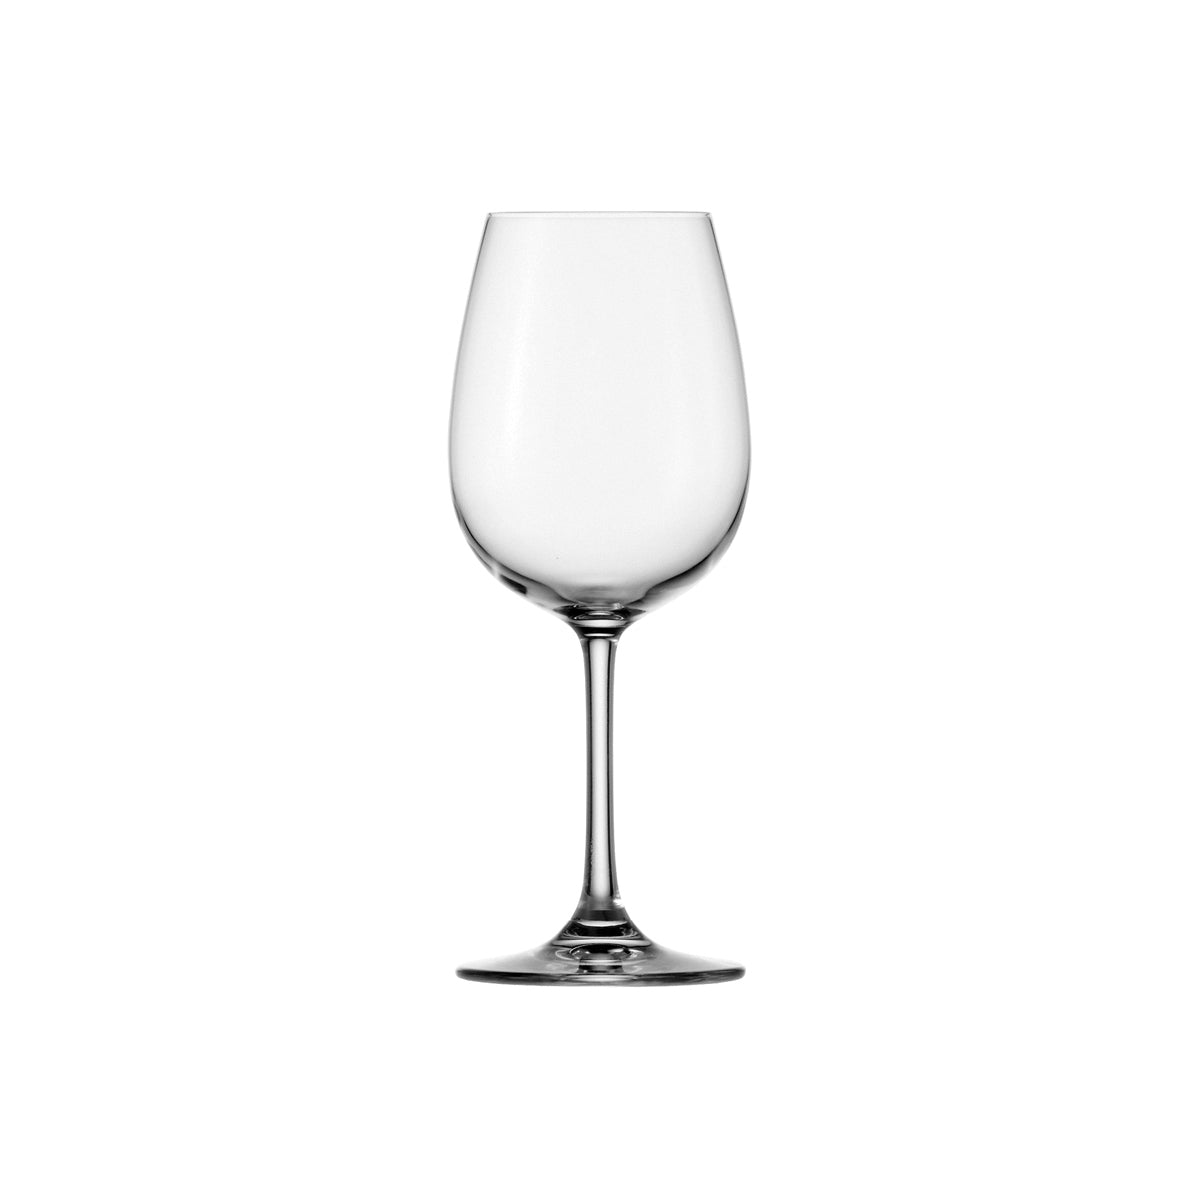 360-855 Stolzle Weinland White Wine 350ml Tomkin Australia Hospitality Supplies